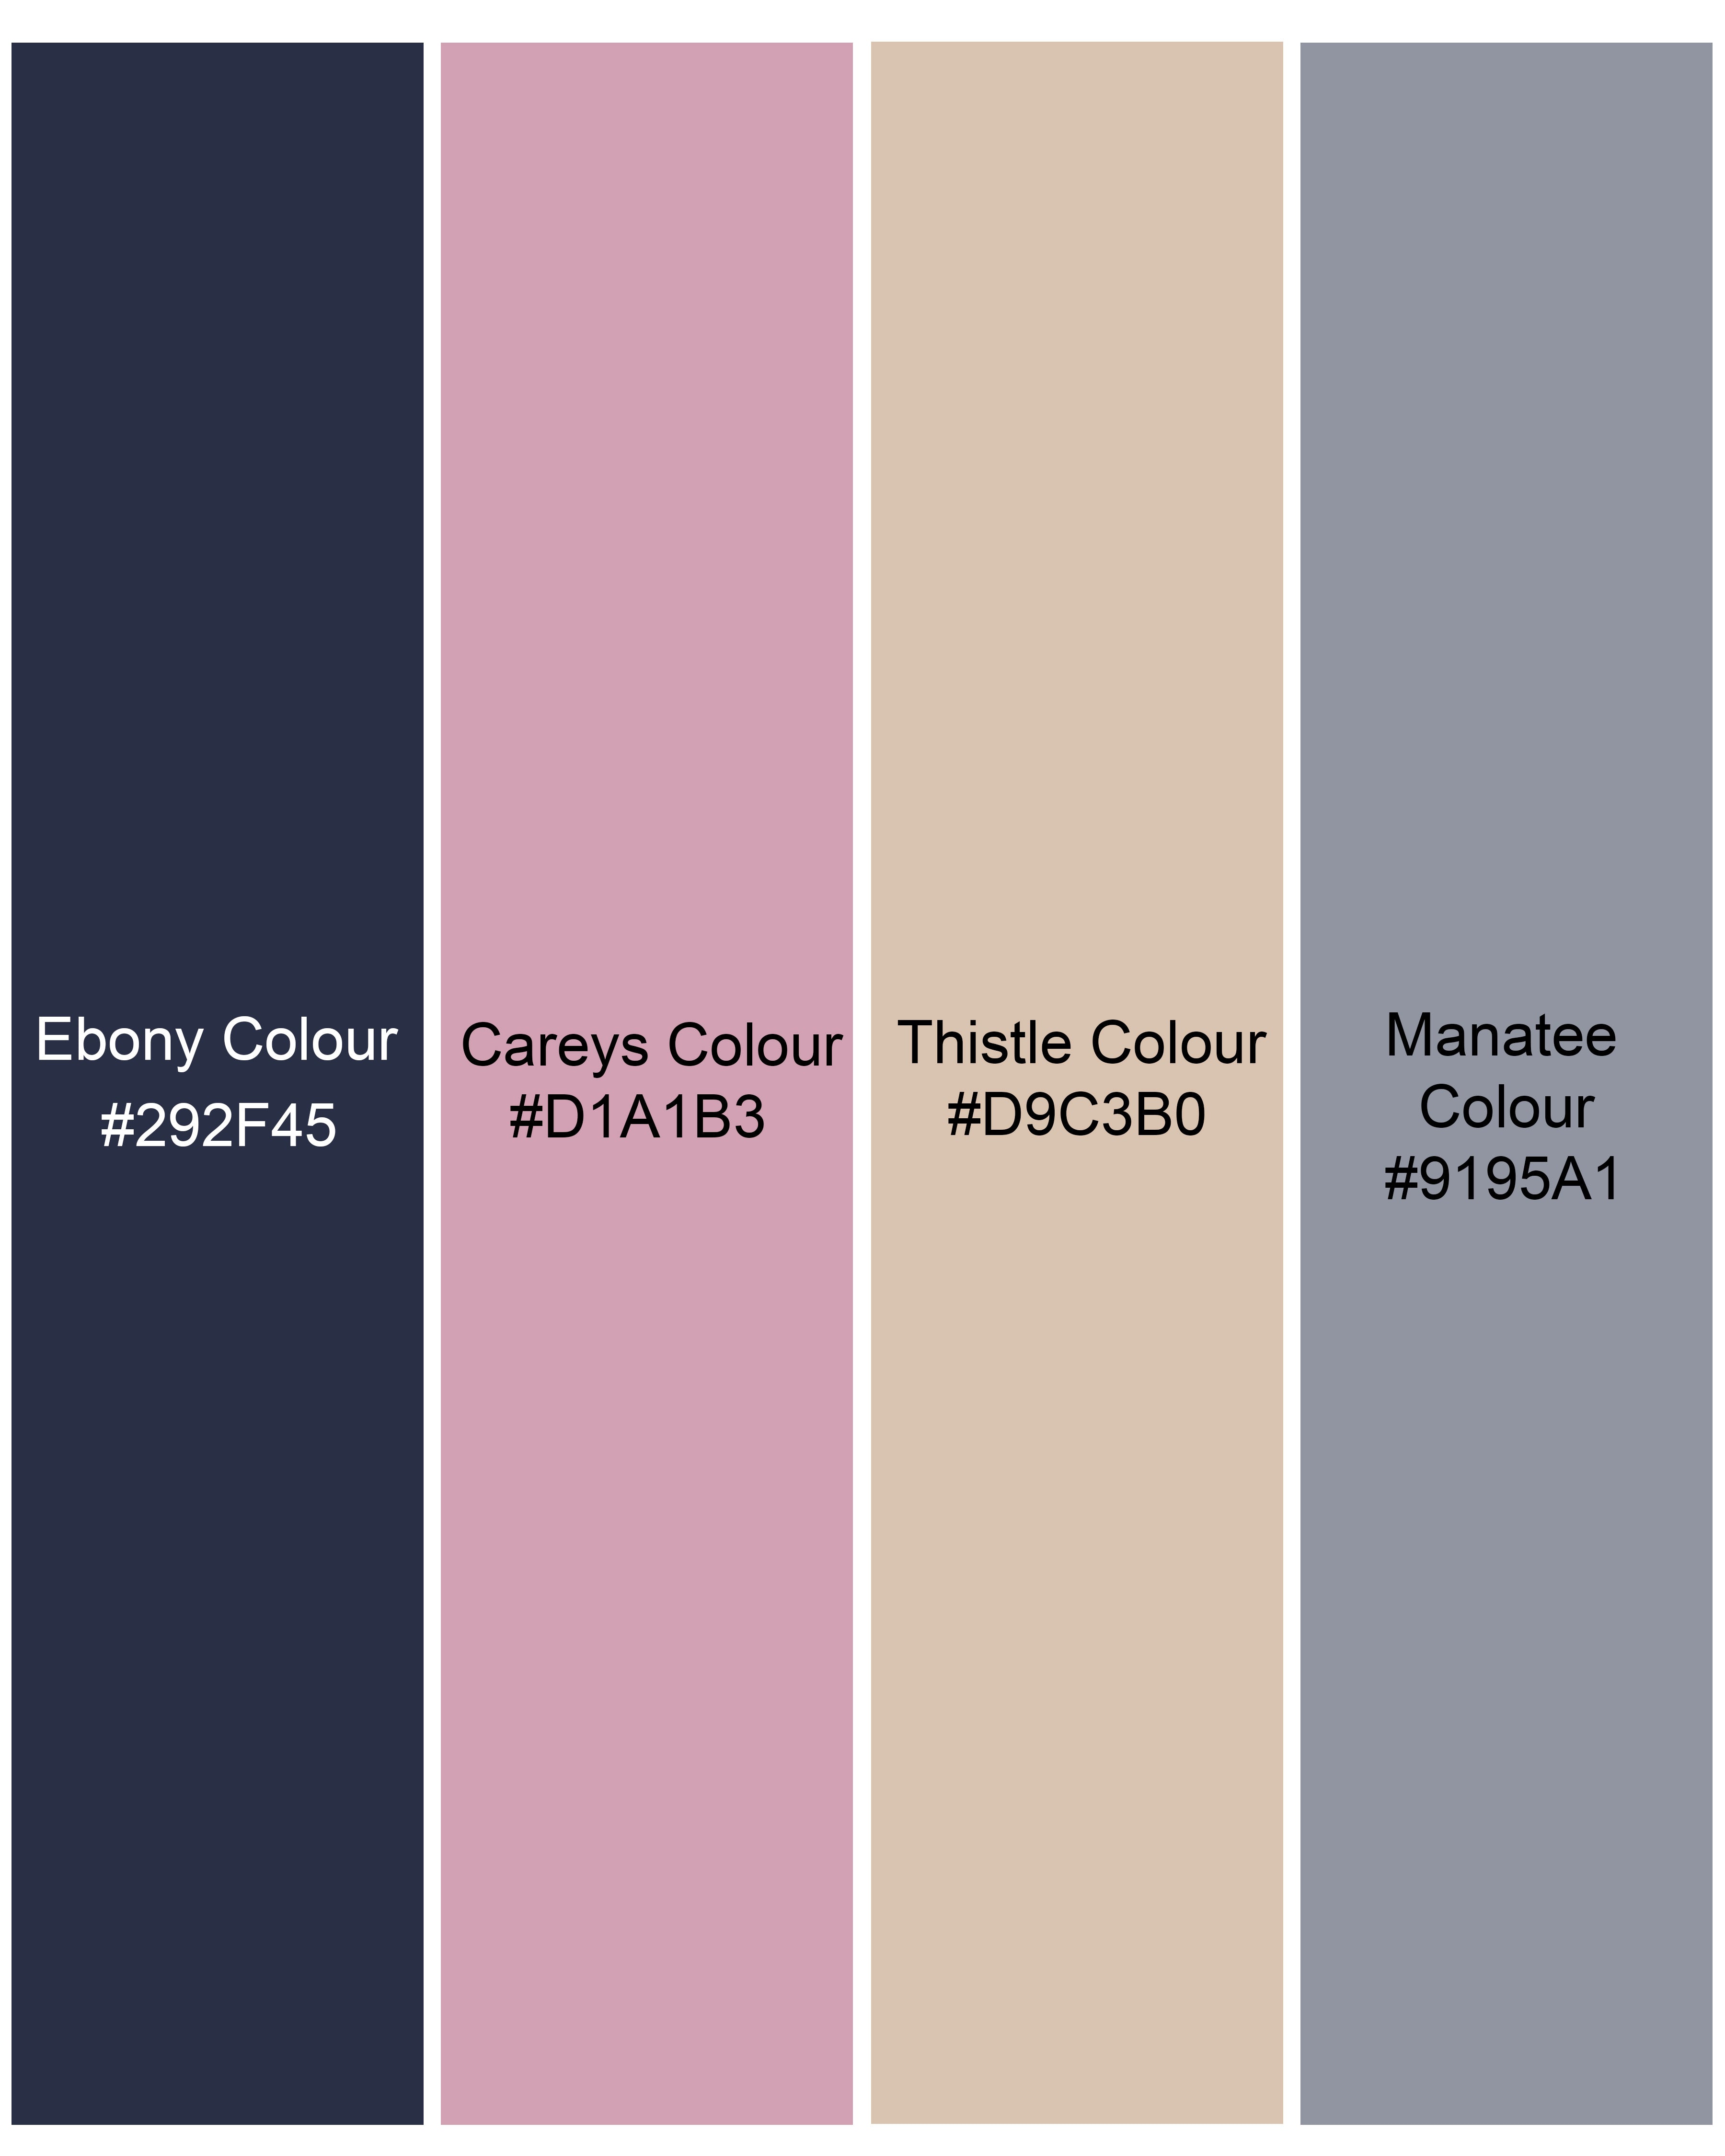 Style Instant-Ebony Blue Ditsy Printed Premium Tencel Shirt